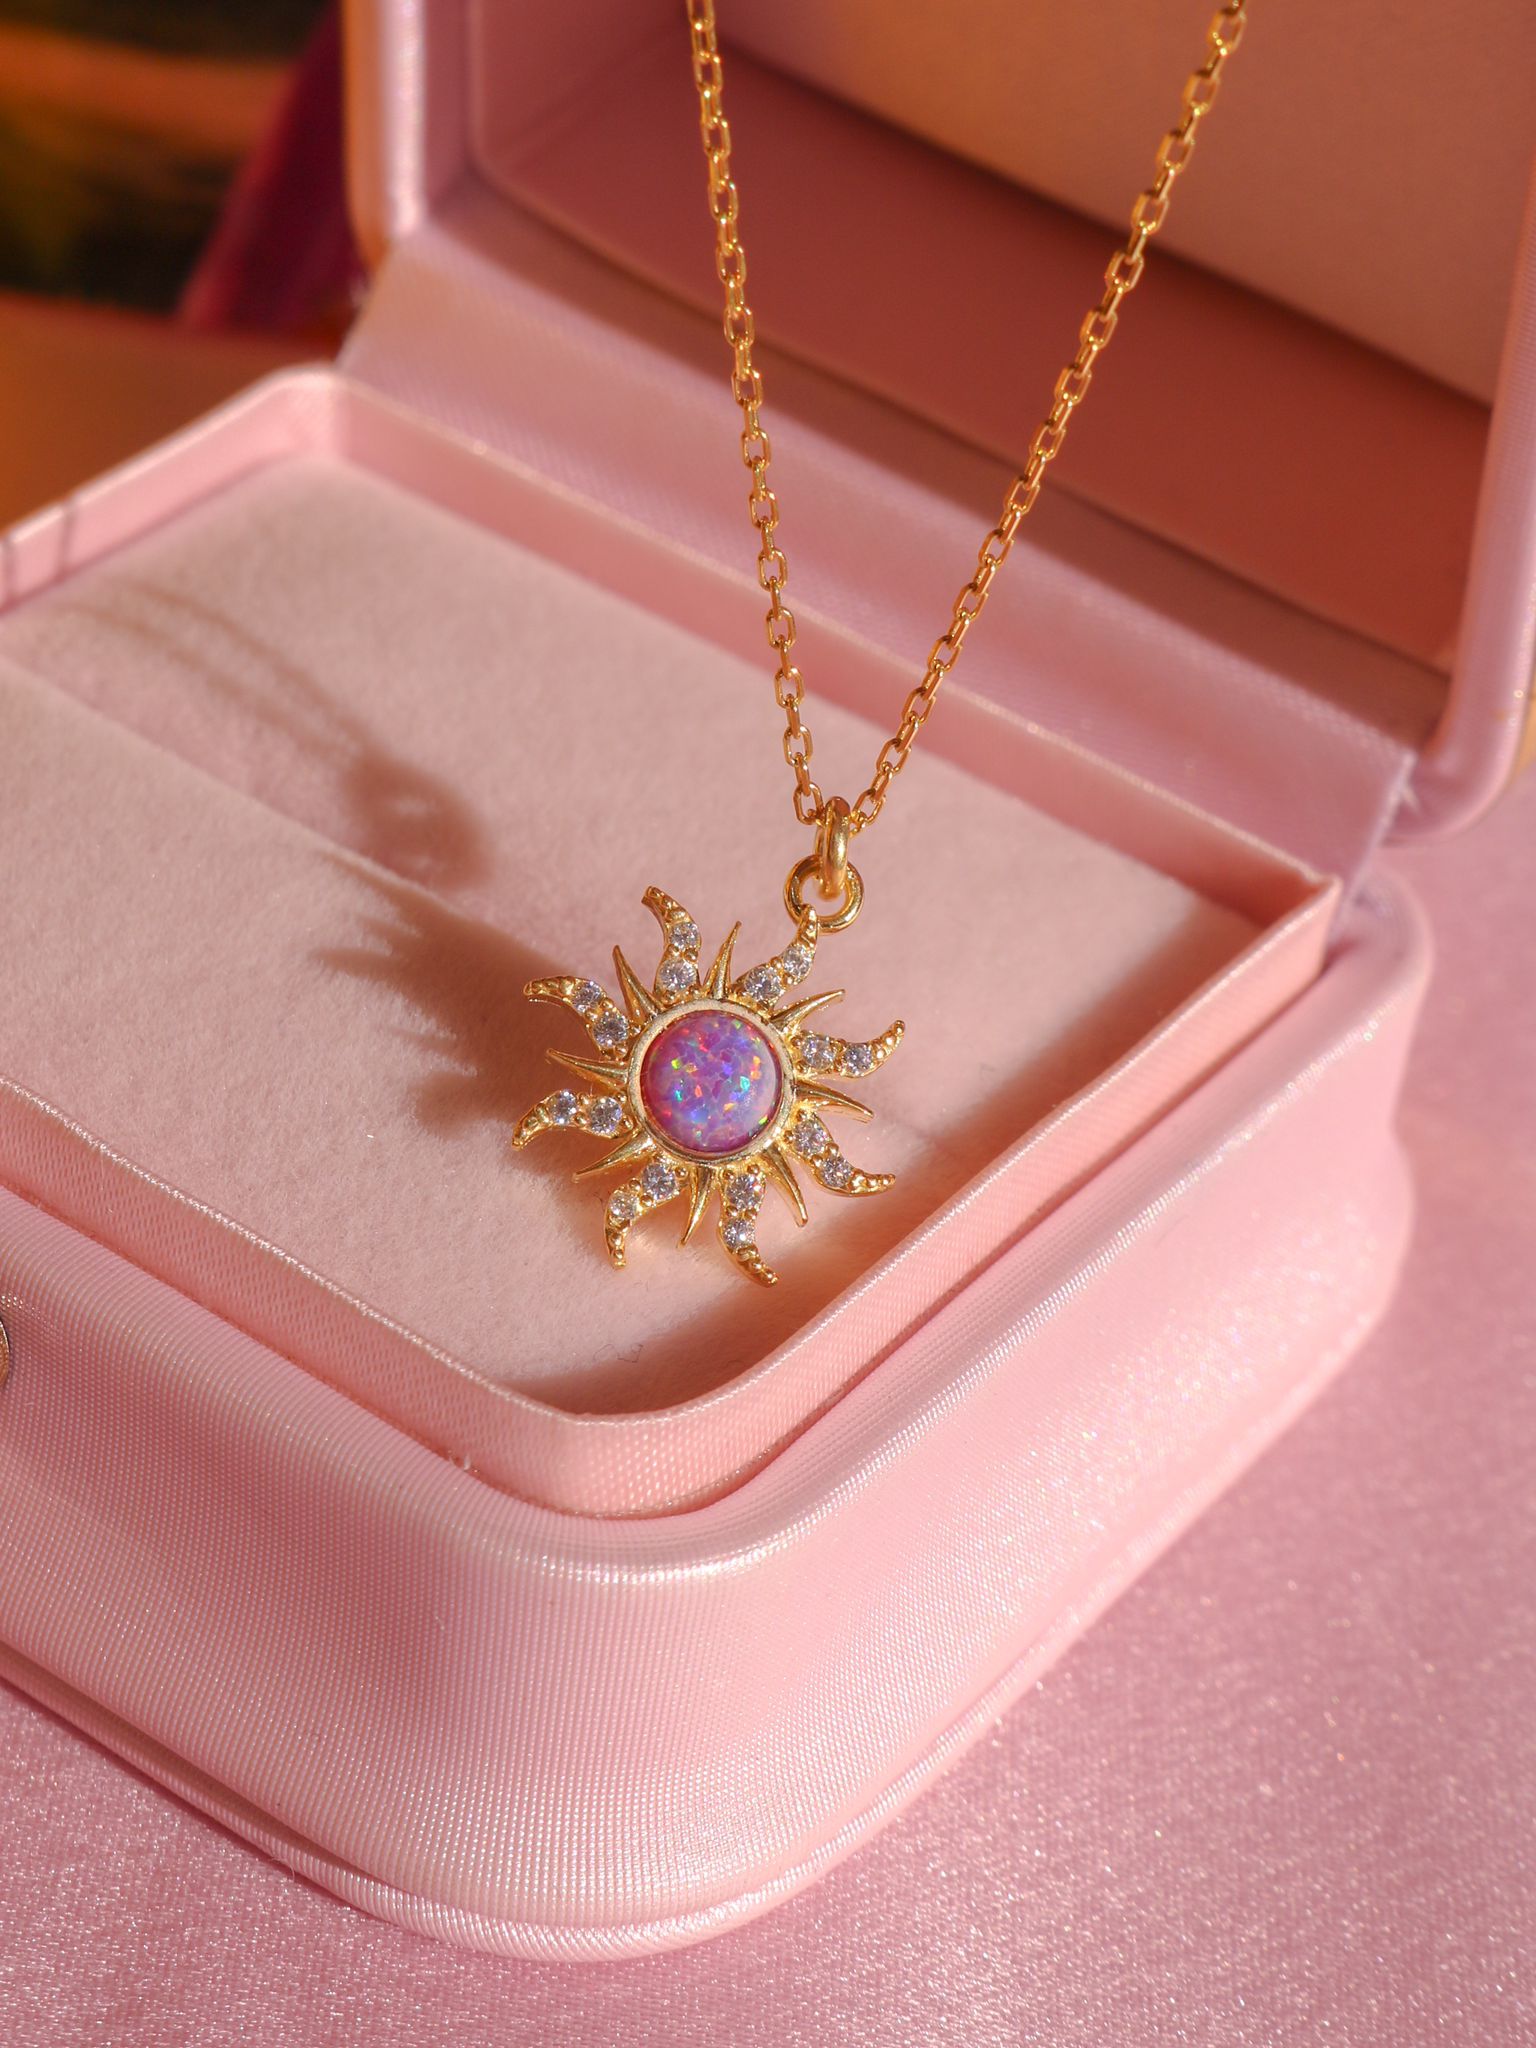 The Sun Necklace in Sterling Silver 925 – Bellaviva Jewelry